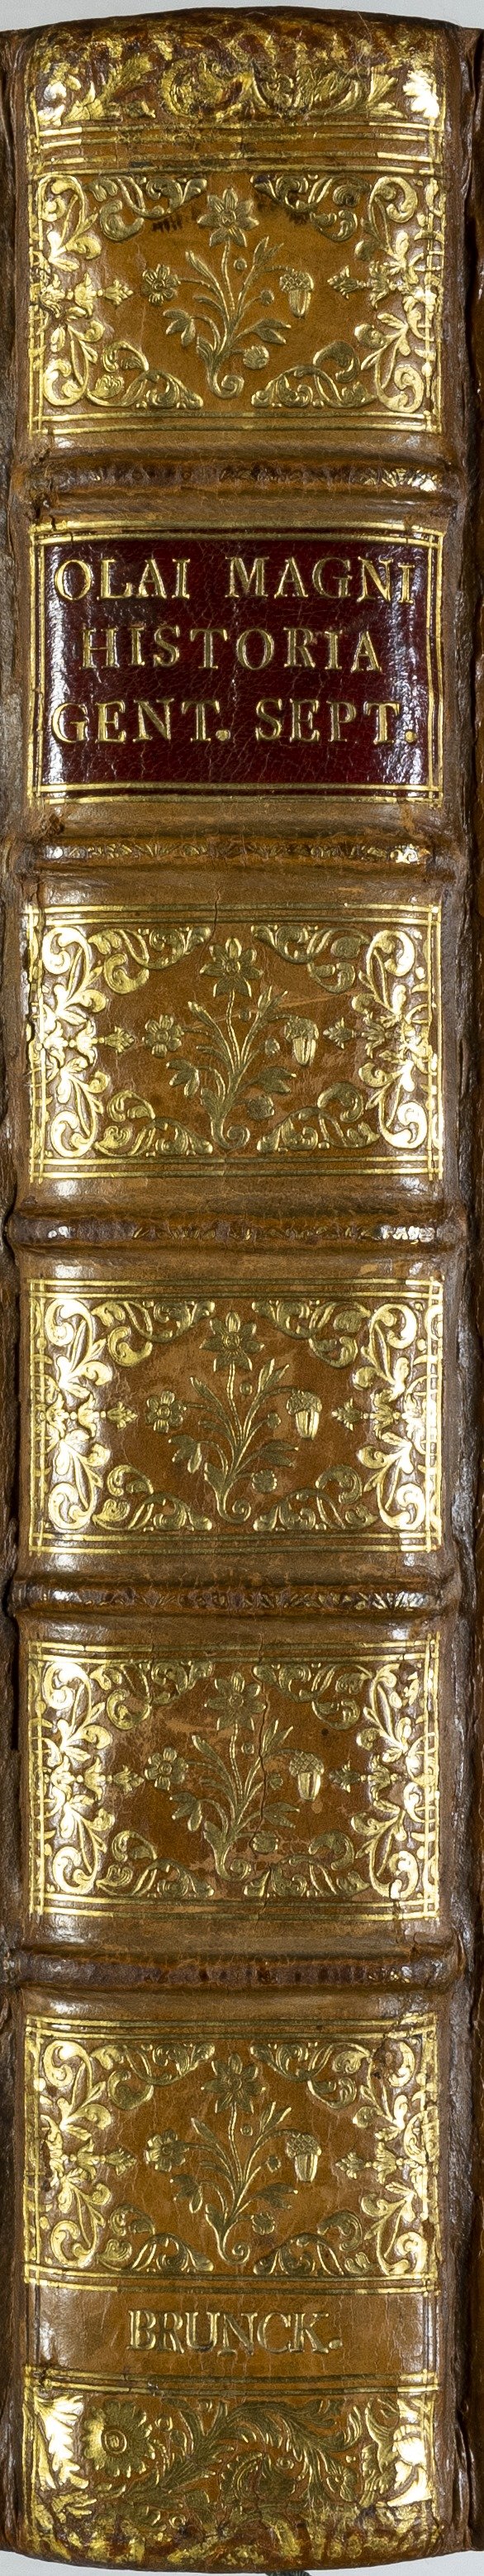 Olaus-Magnus-Historia-scandinavia-1555-first-edition-brunck-jeanson-50.jpg